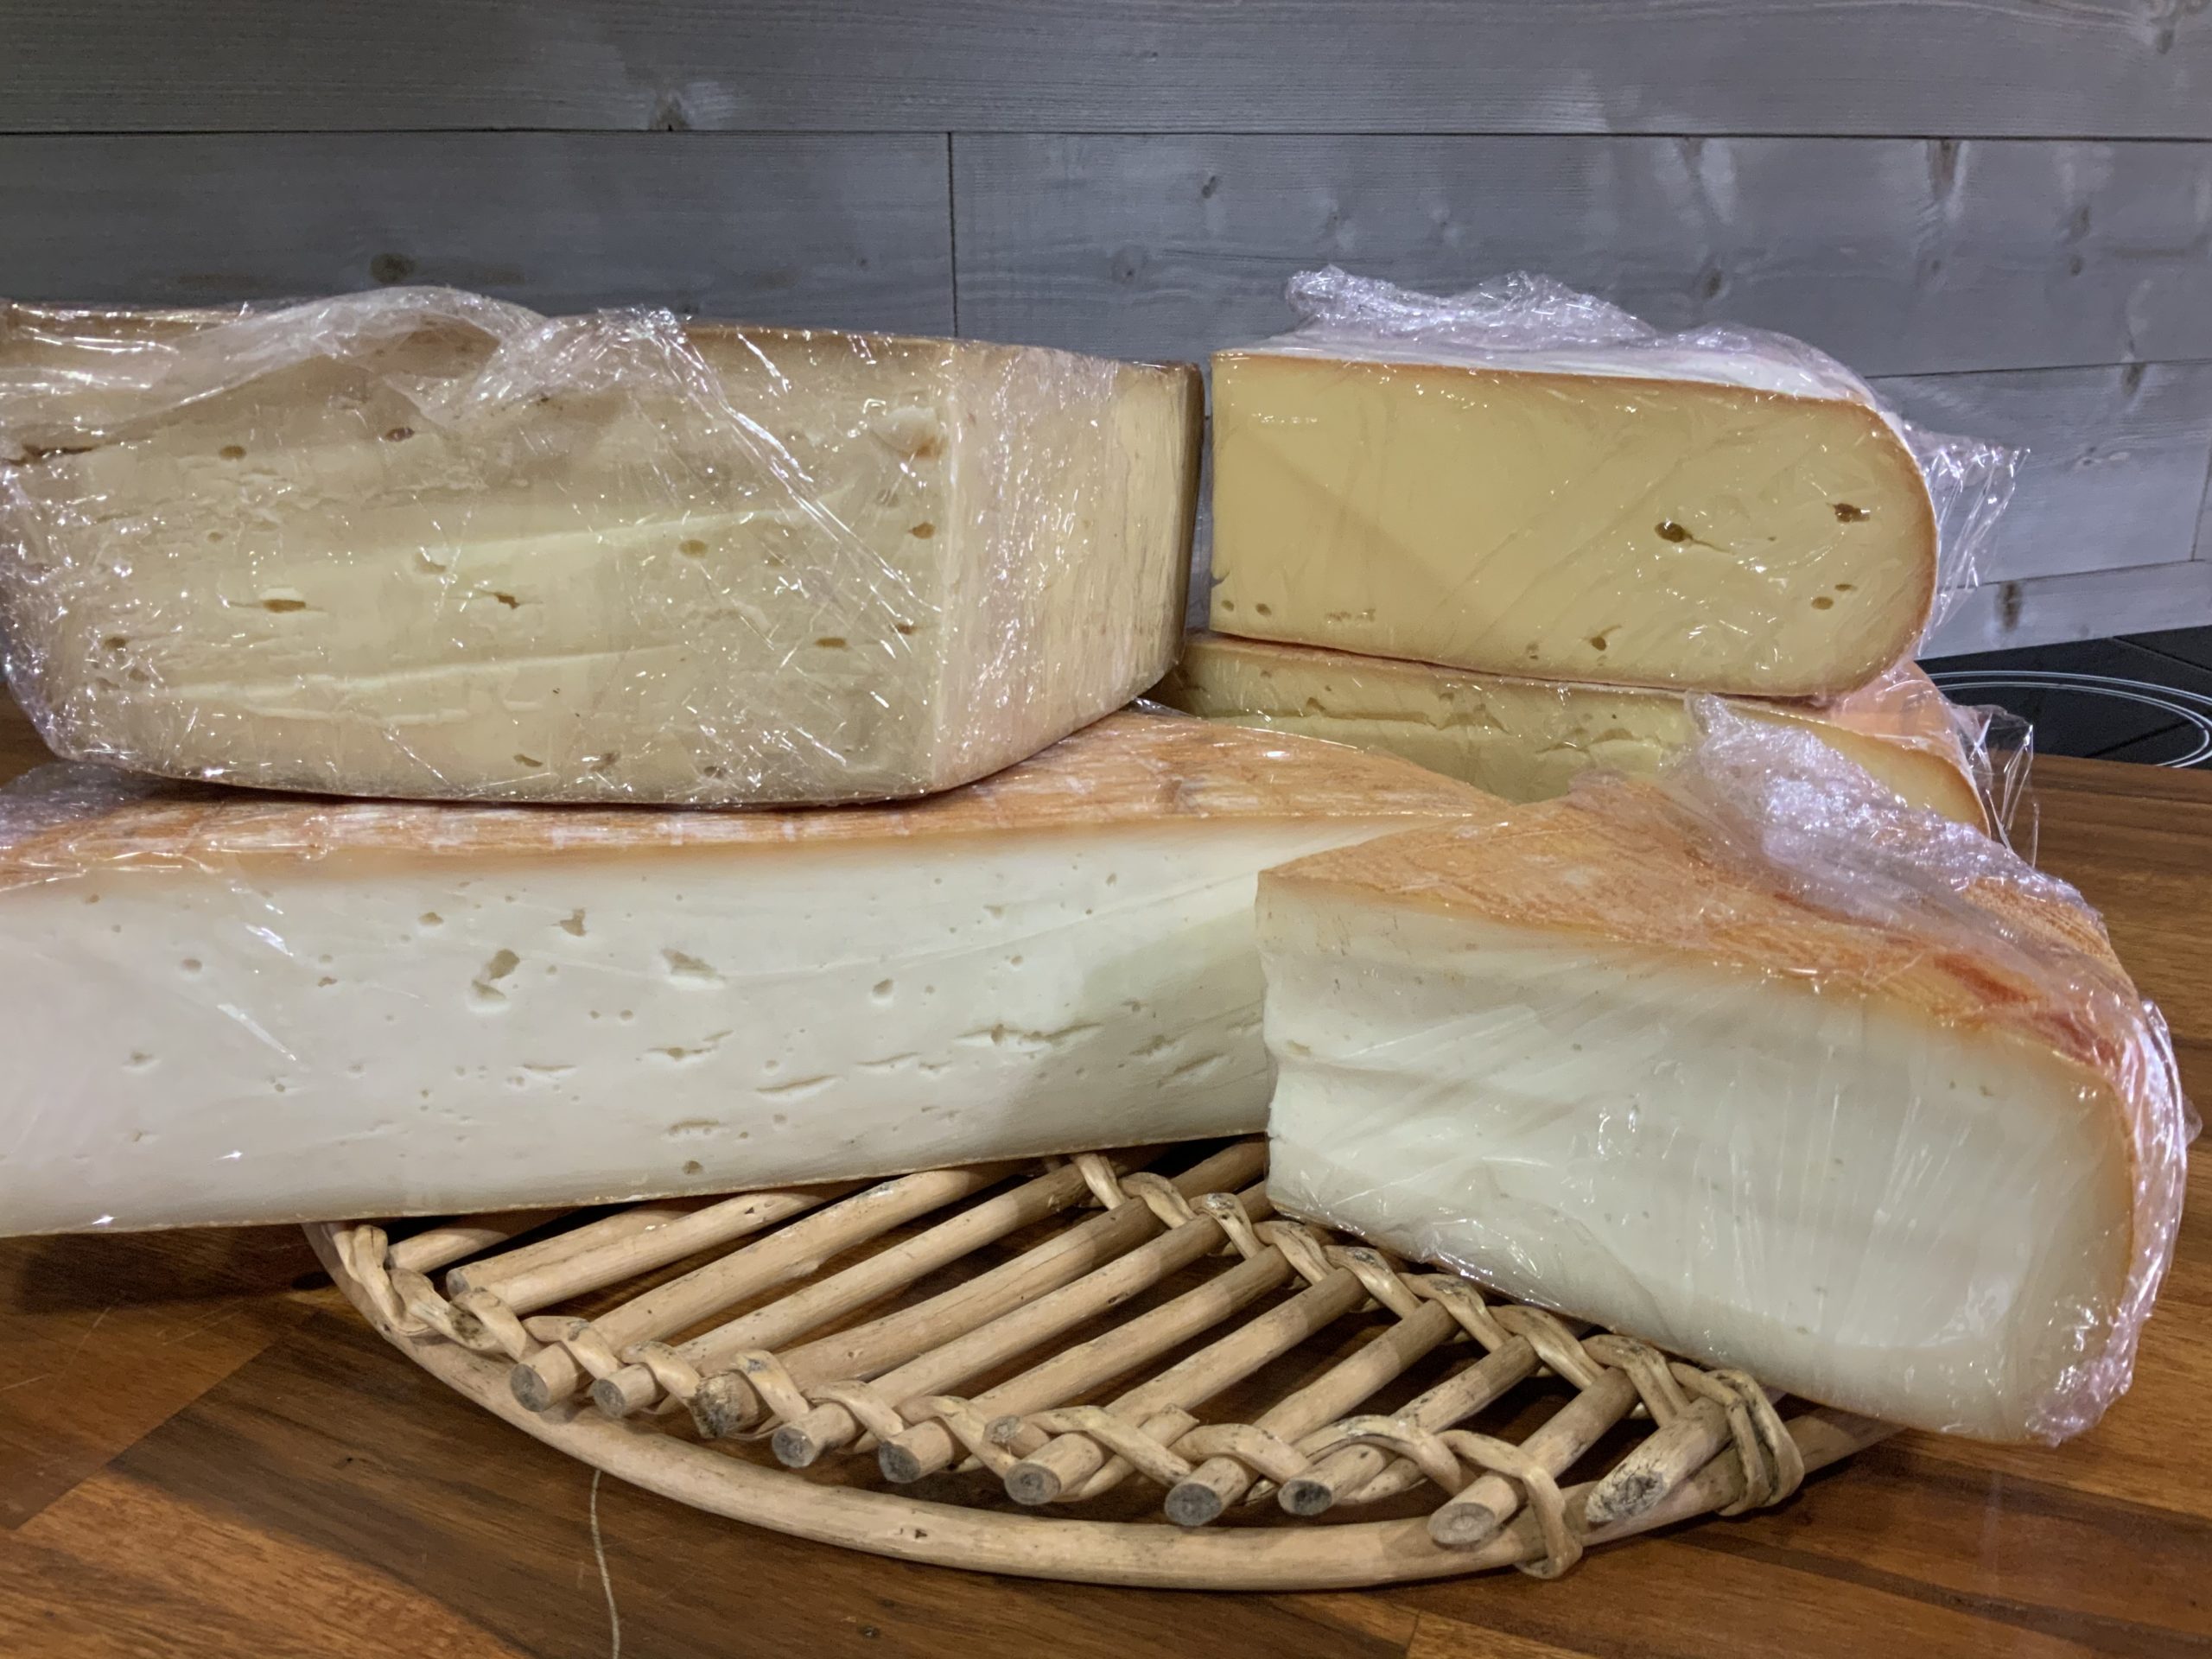 Vente fromages Raclette 4 personnes 220V - Annecy Haute Savoie